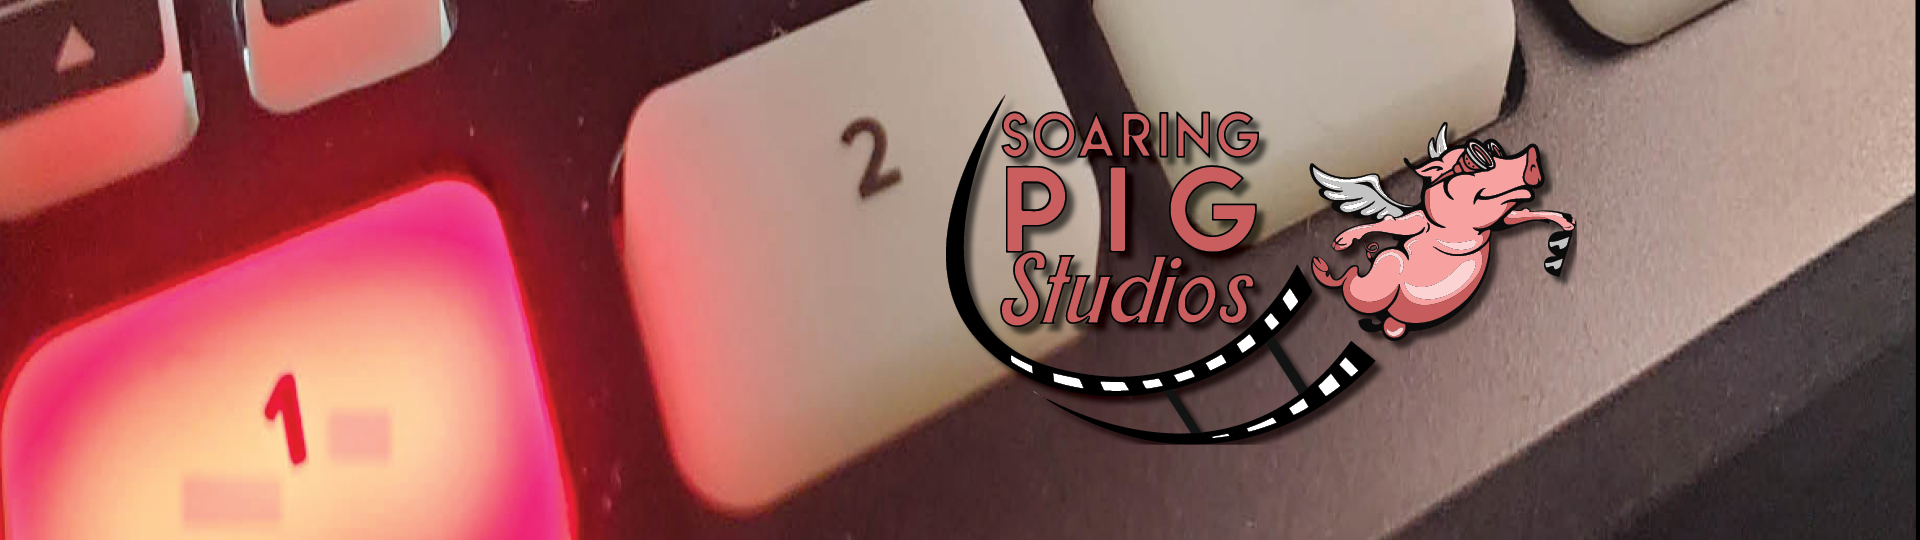 Soaring Pig Studios Communications